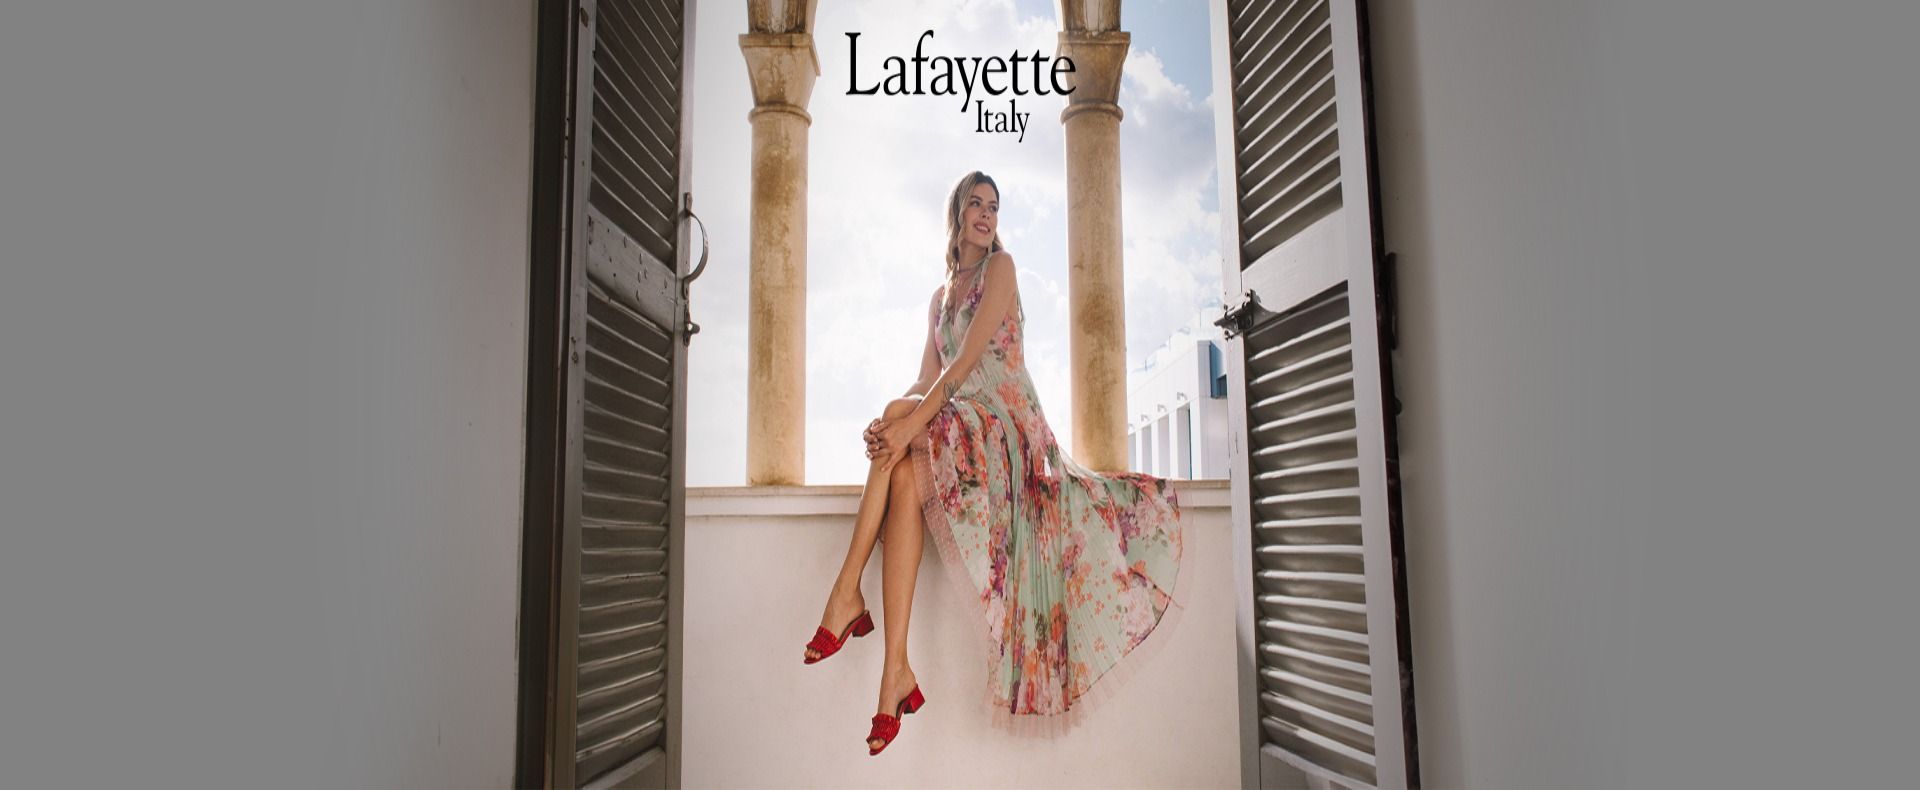 photo of Lafayette Italy